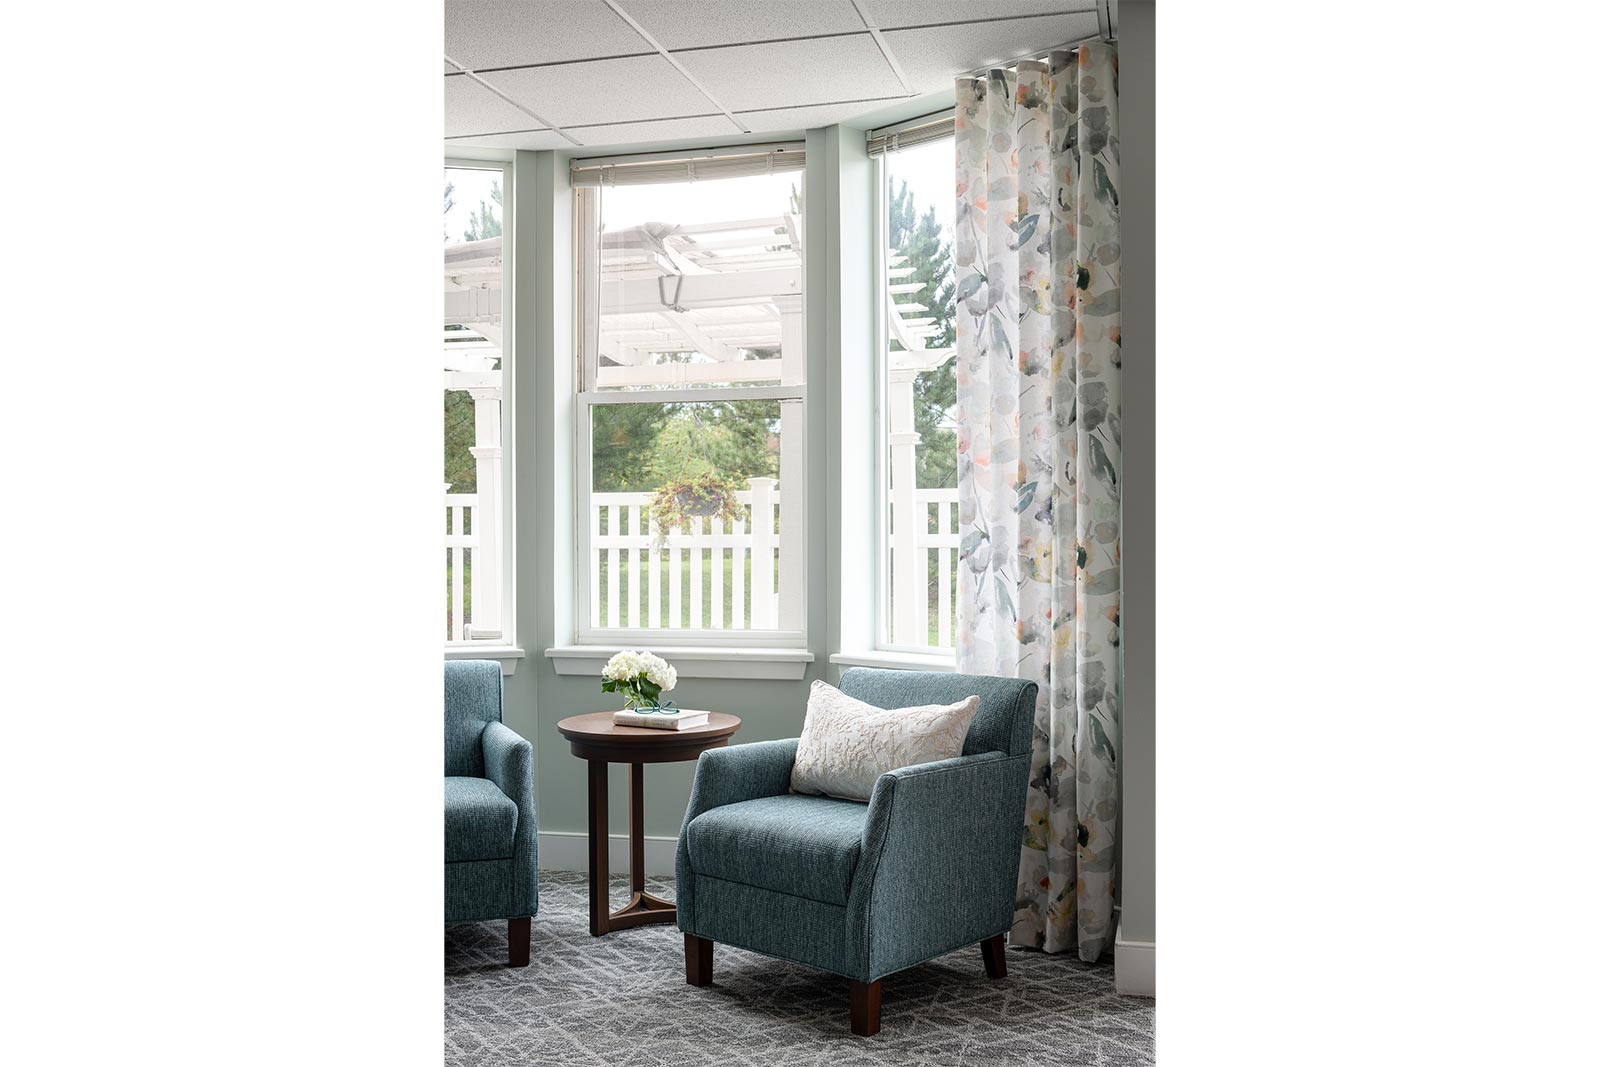 vt assisted living interior design